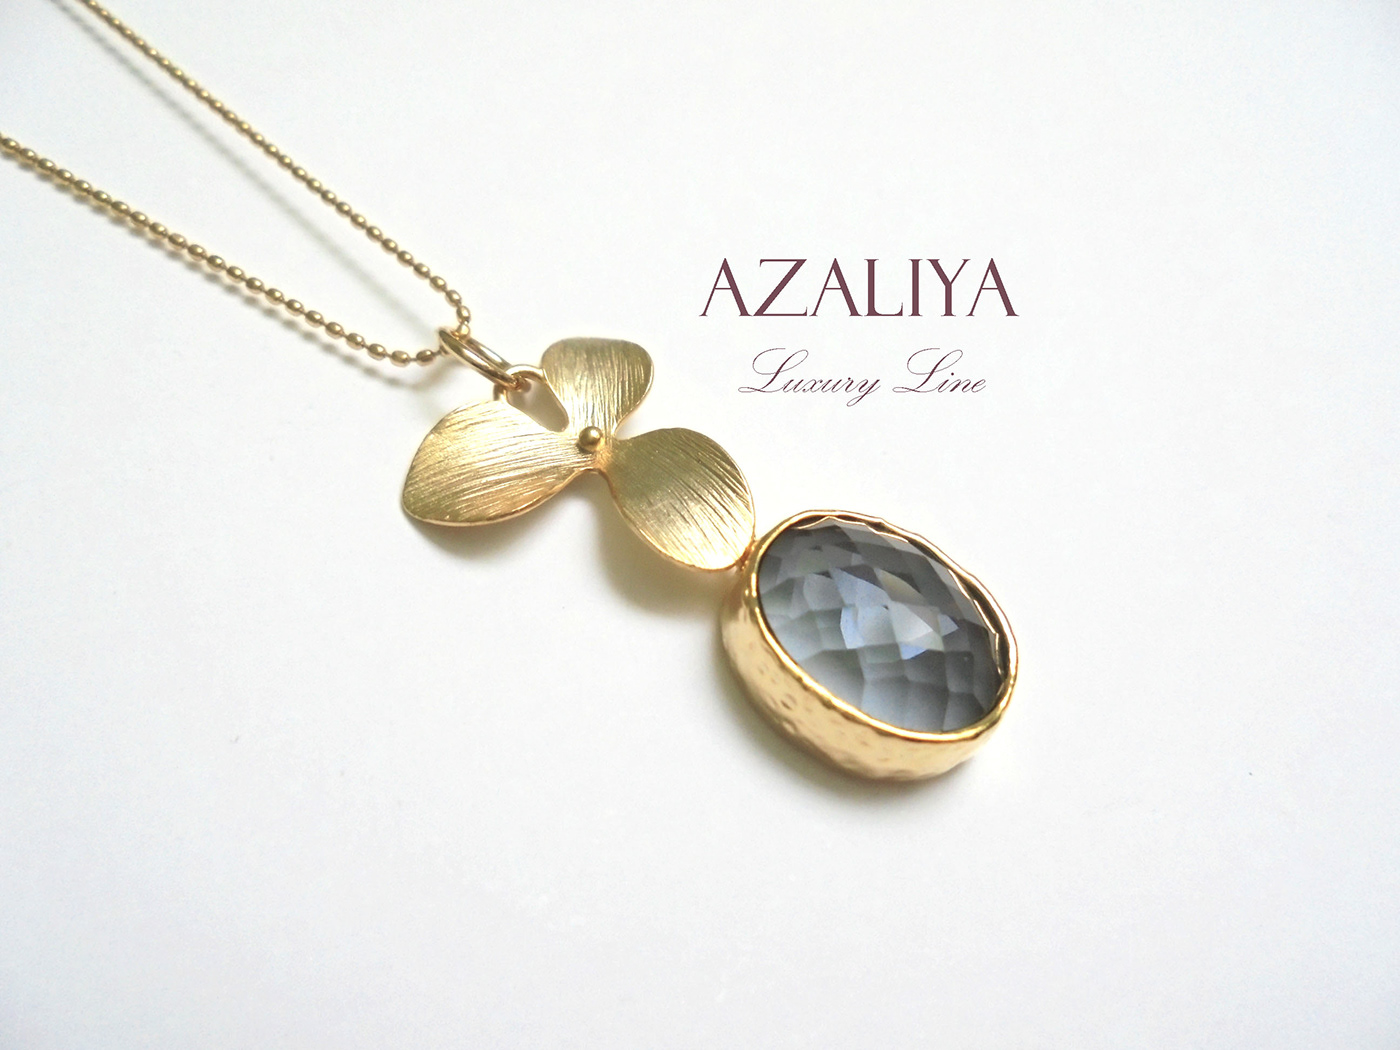 editorial styling Jewelry Design  Schmuckdesign Kreativleitung fotografie Photography  branding  fashion styling Azaliya Luxury Line azaliya jewelry